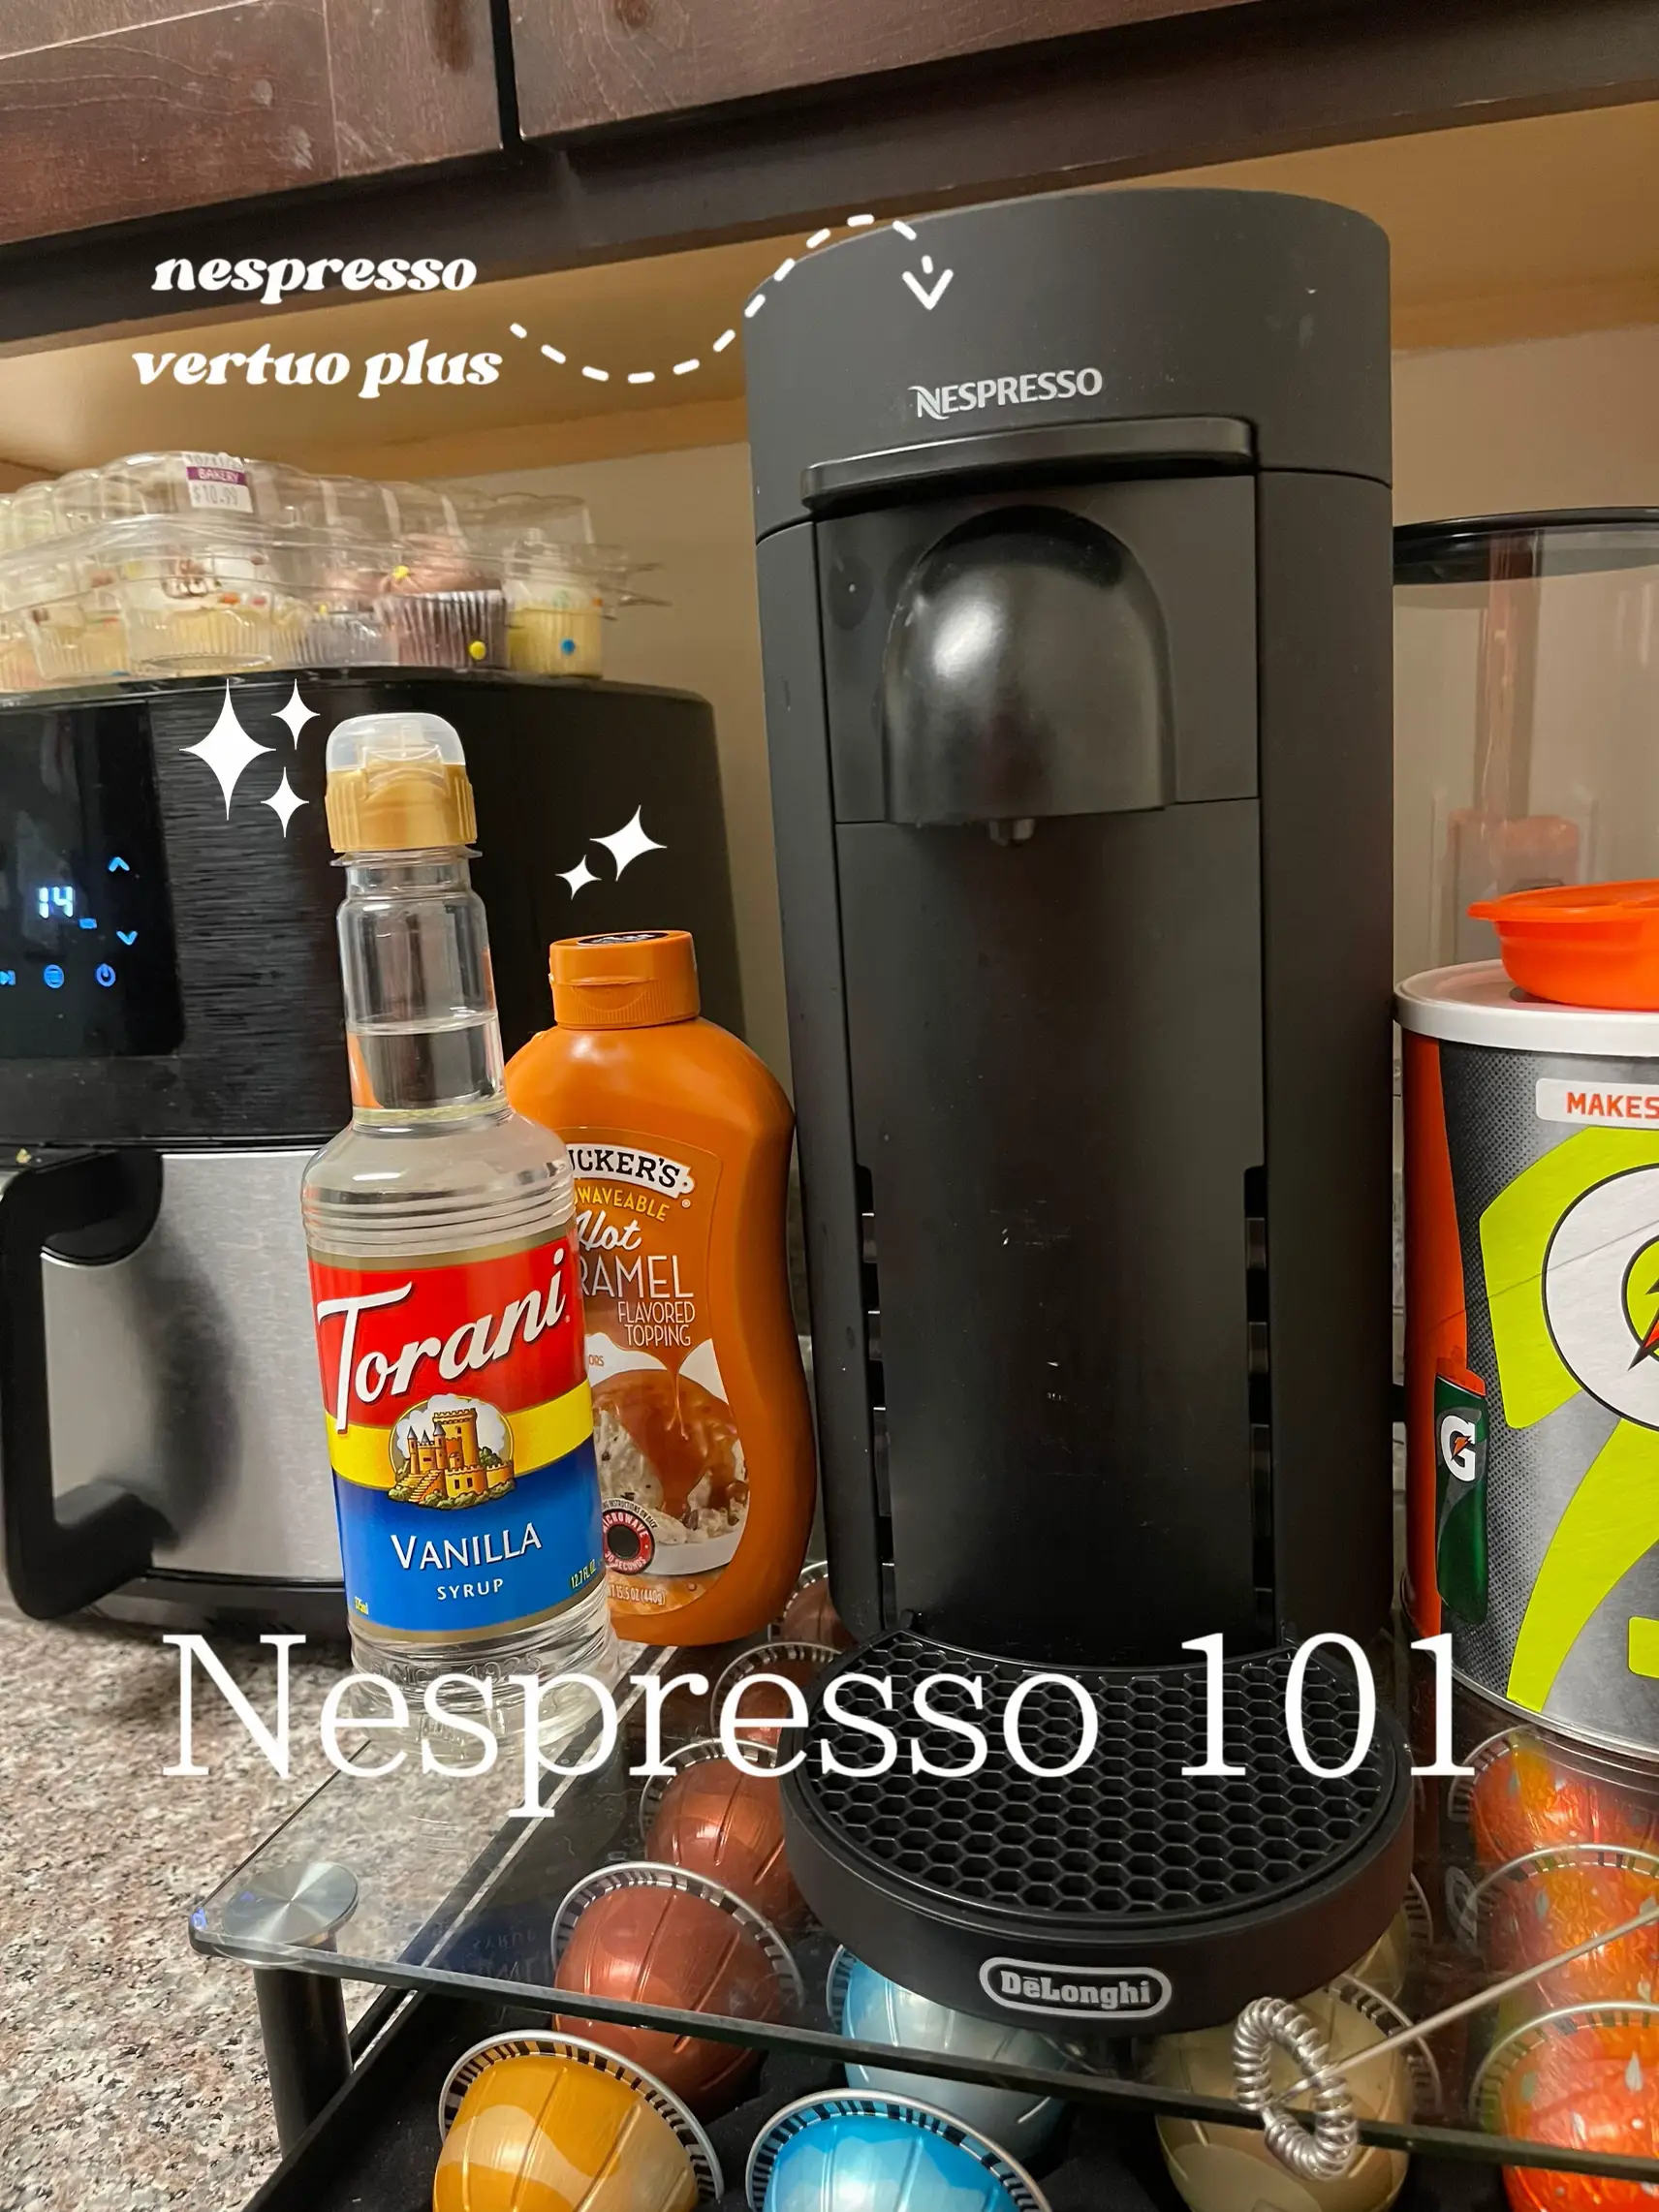 Nespresso Vertuo Sweet Vanilla Coffee